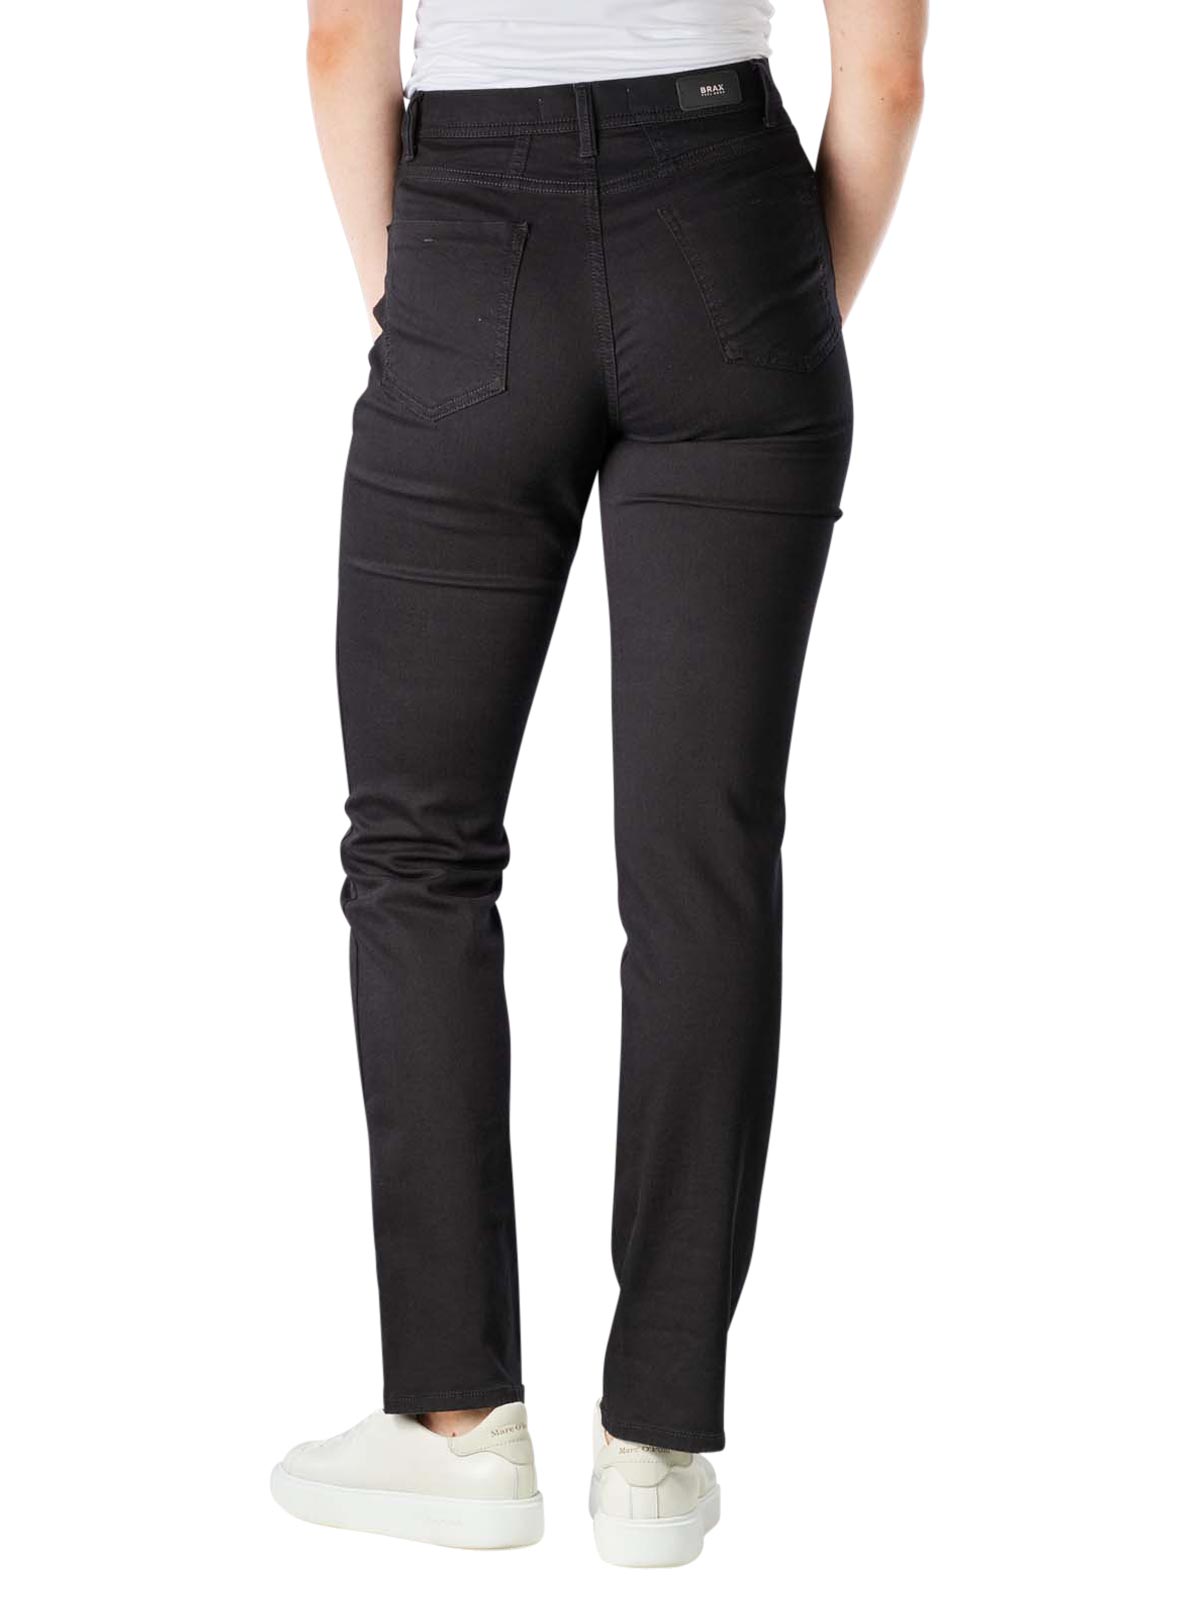 risico St Plakken Brax Carola Jeans Straight Fit Black Brax Women's Jeans | Free Shipping on  BEBASIC.CH - SIMPLY LOOK GOOD